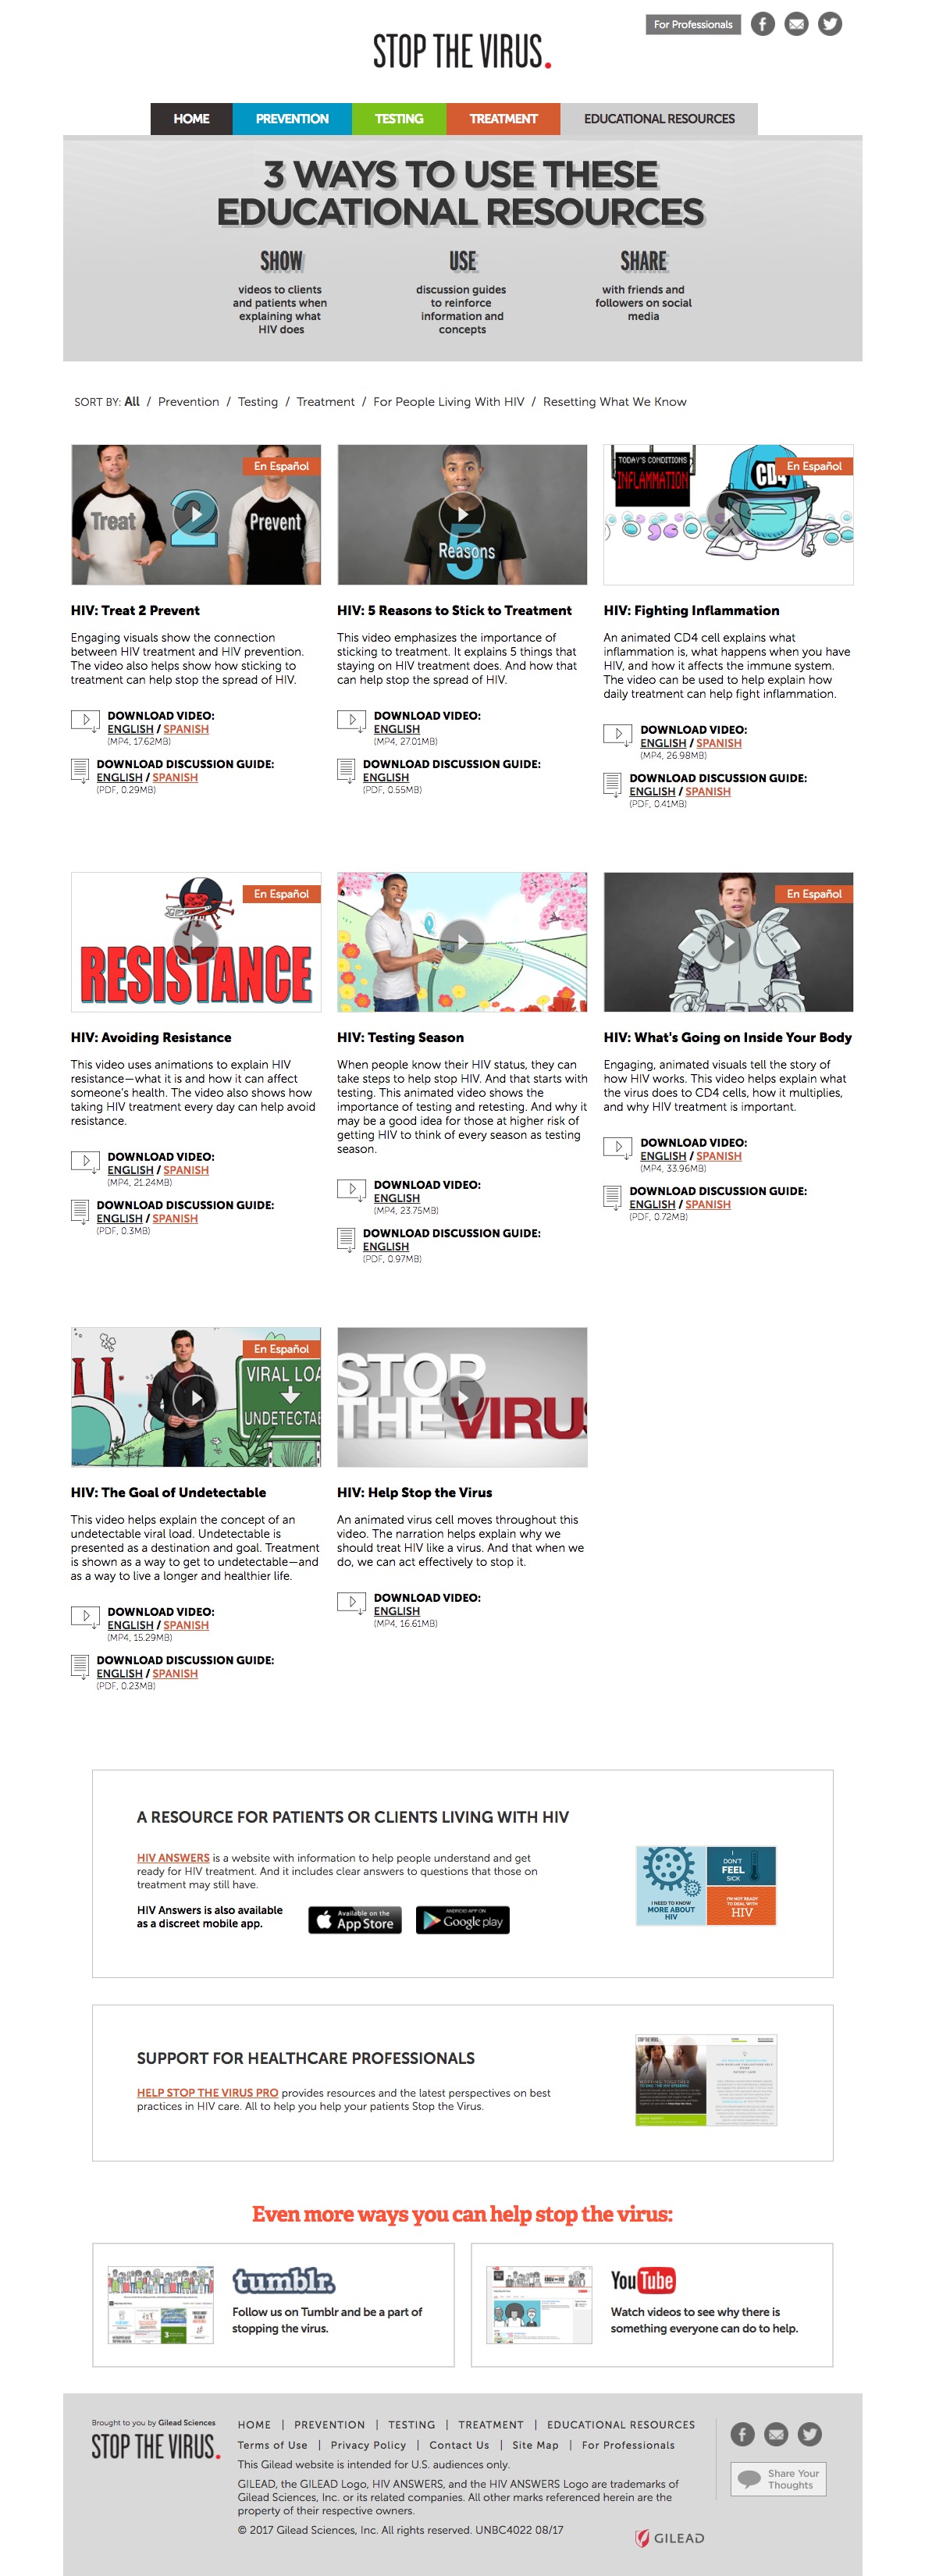 Stop The Virus - Disease Awareness Website from Gilead - Educational Resources